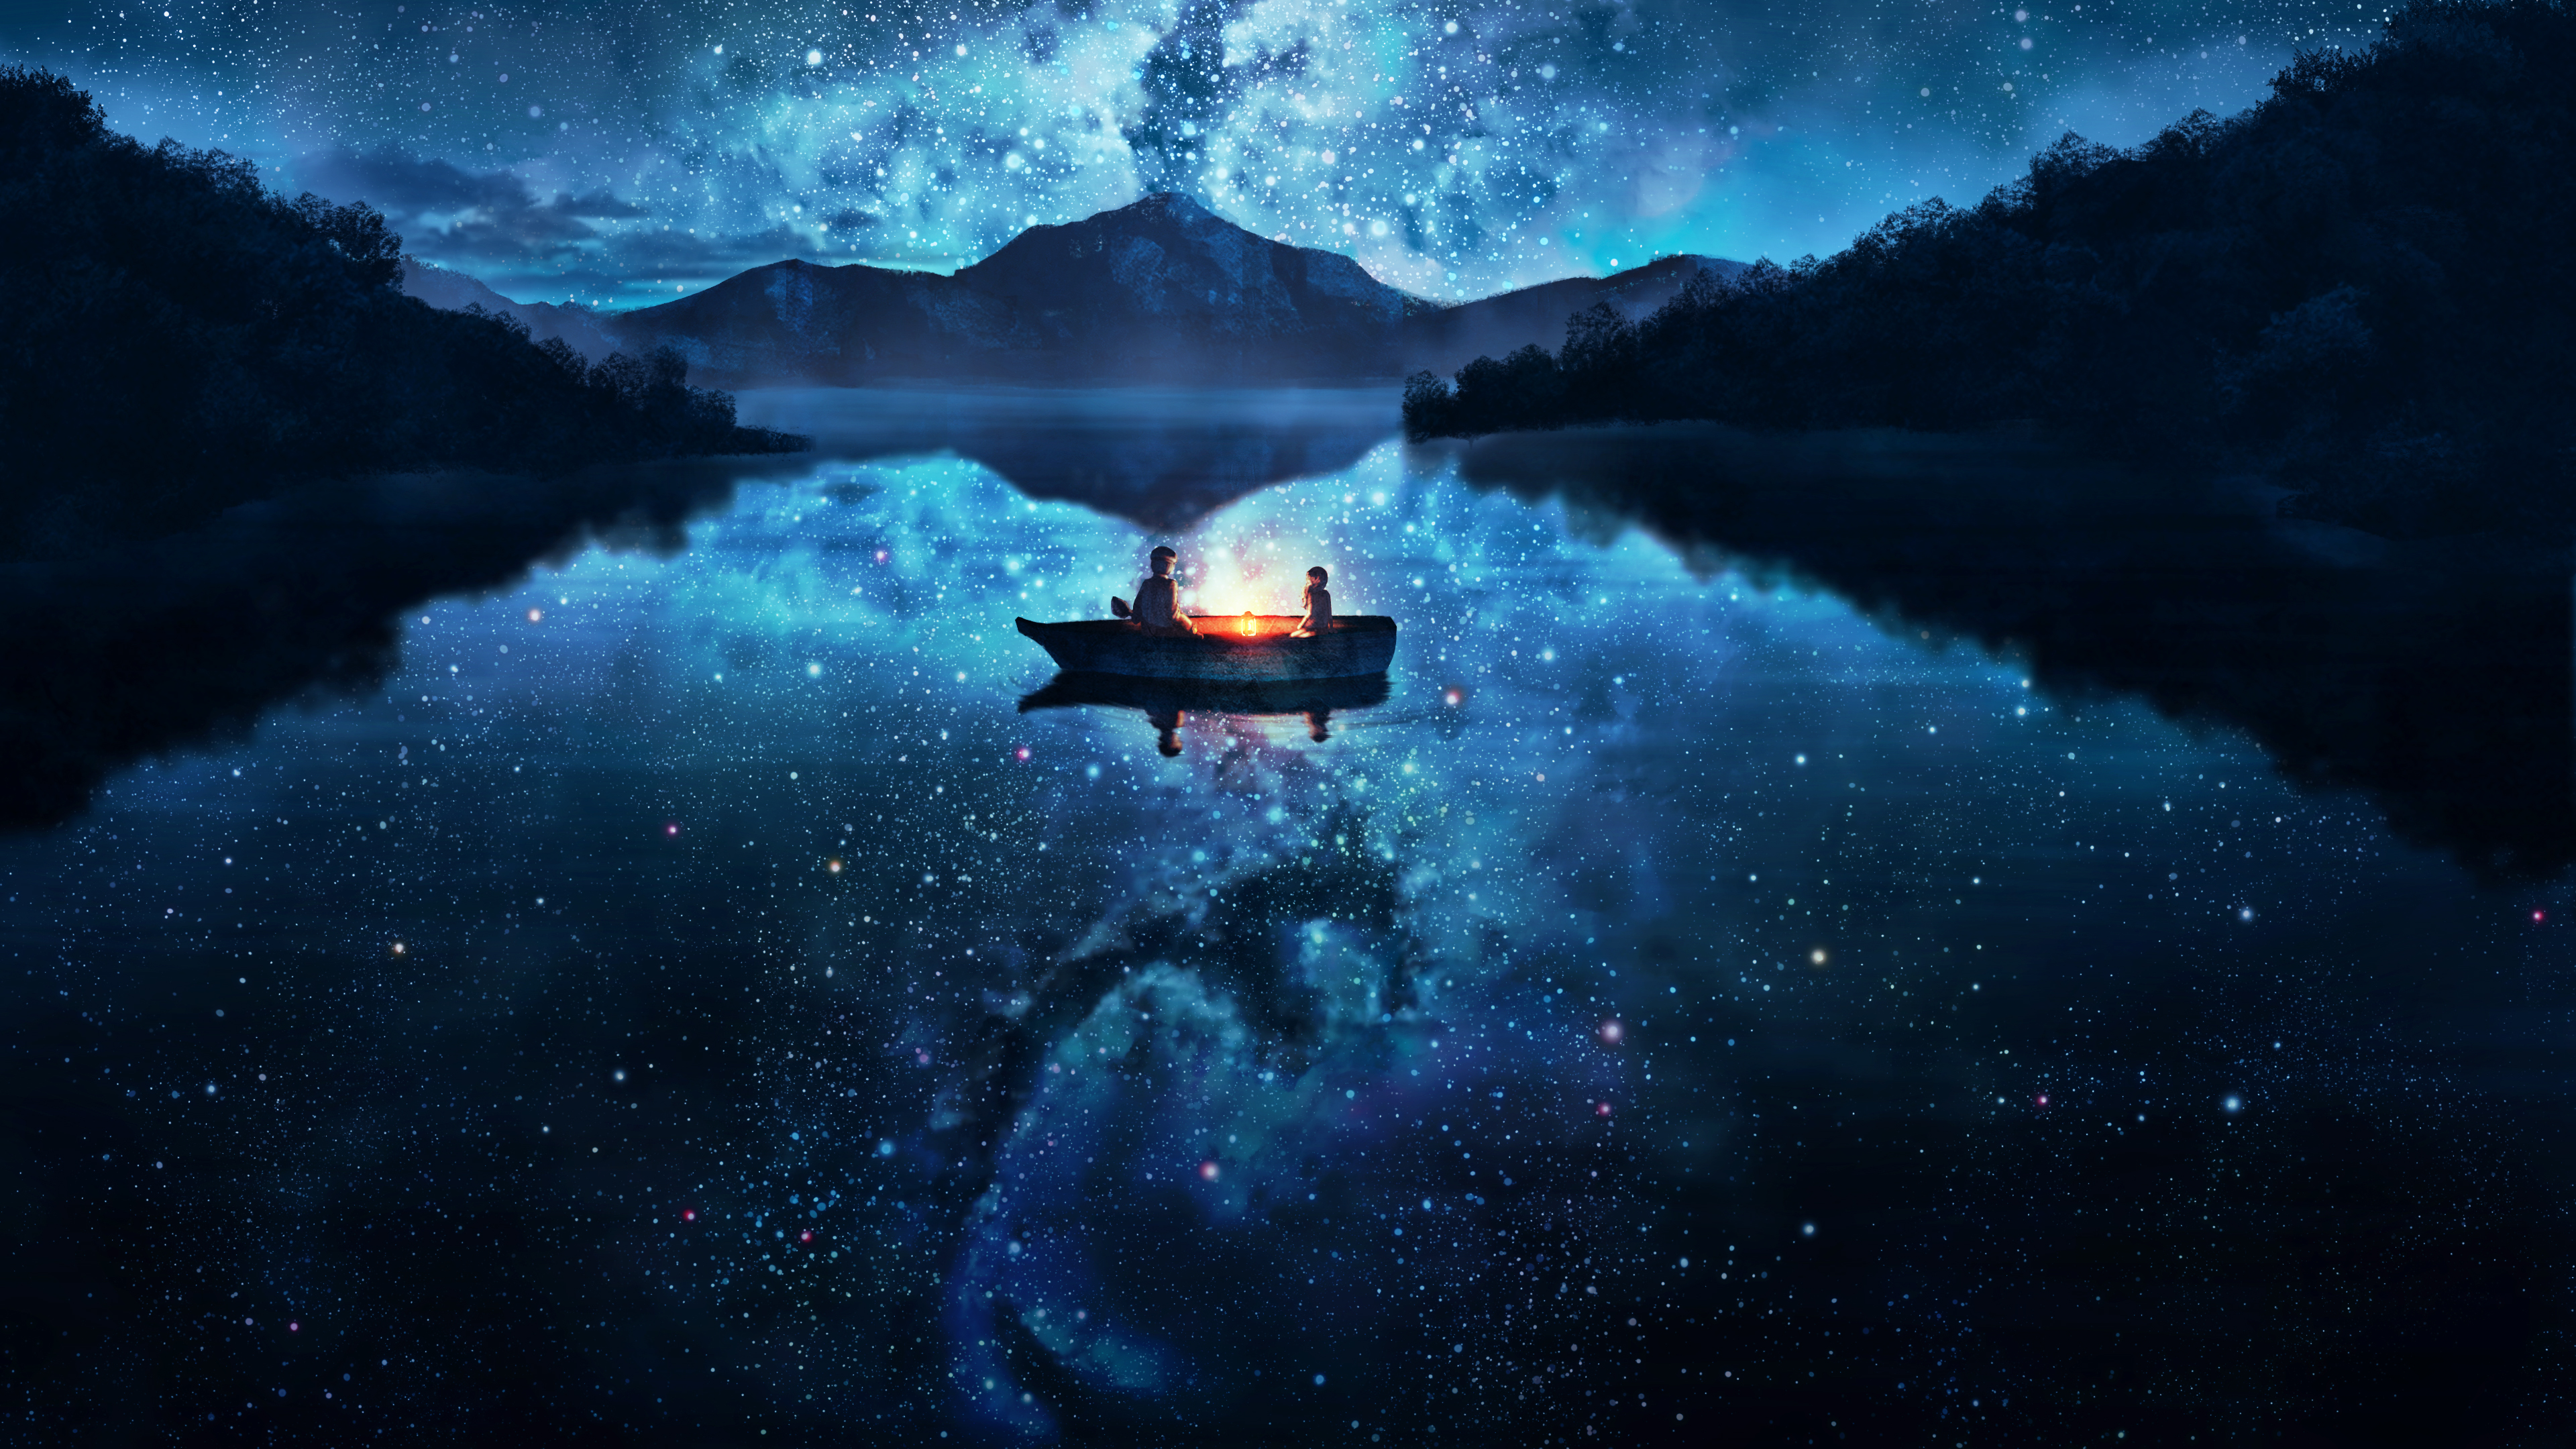 HD wallpaper anime, night, reflection, starry sky, boat, lake, scenic